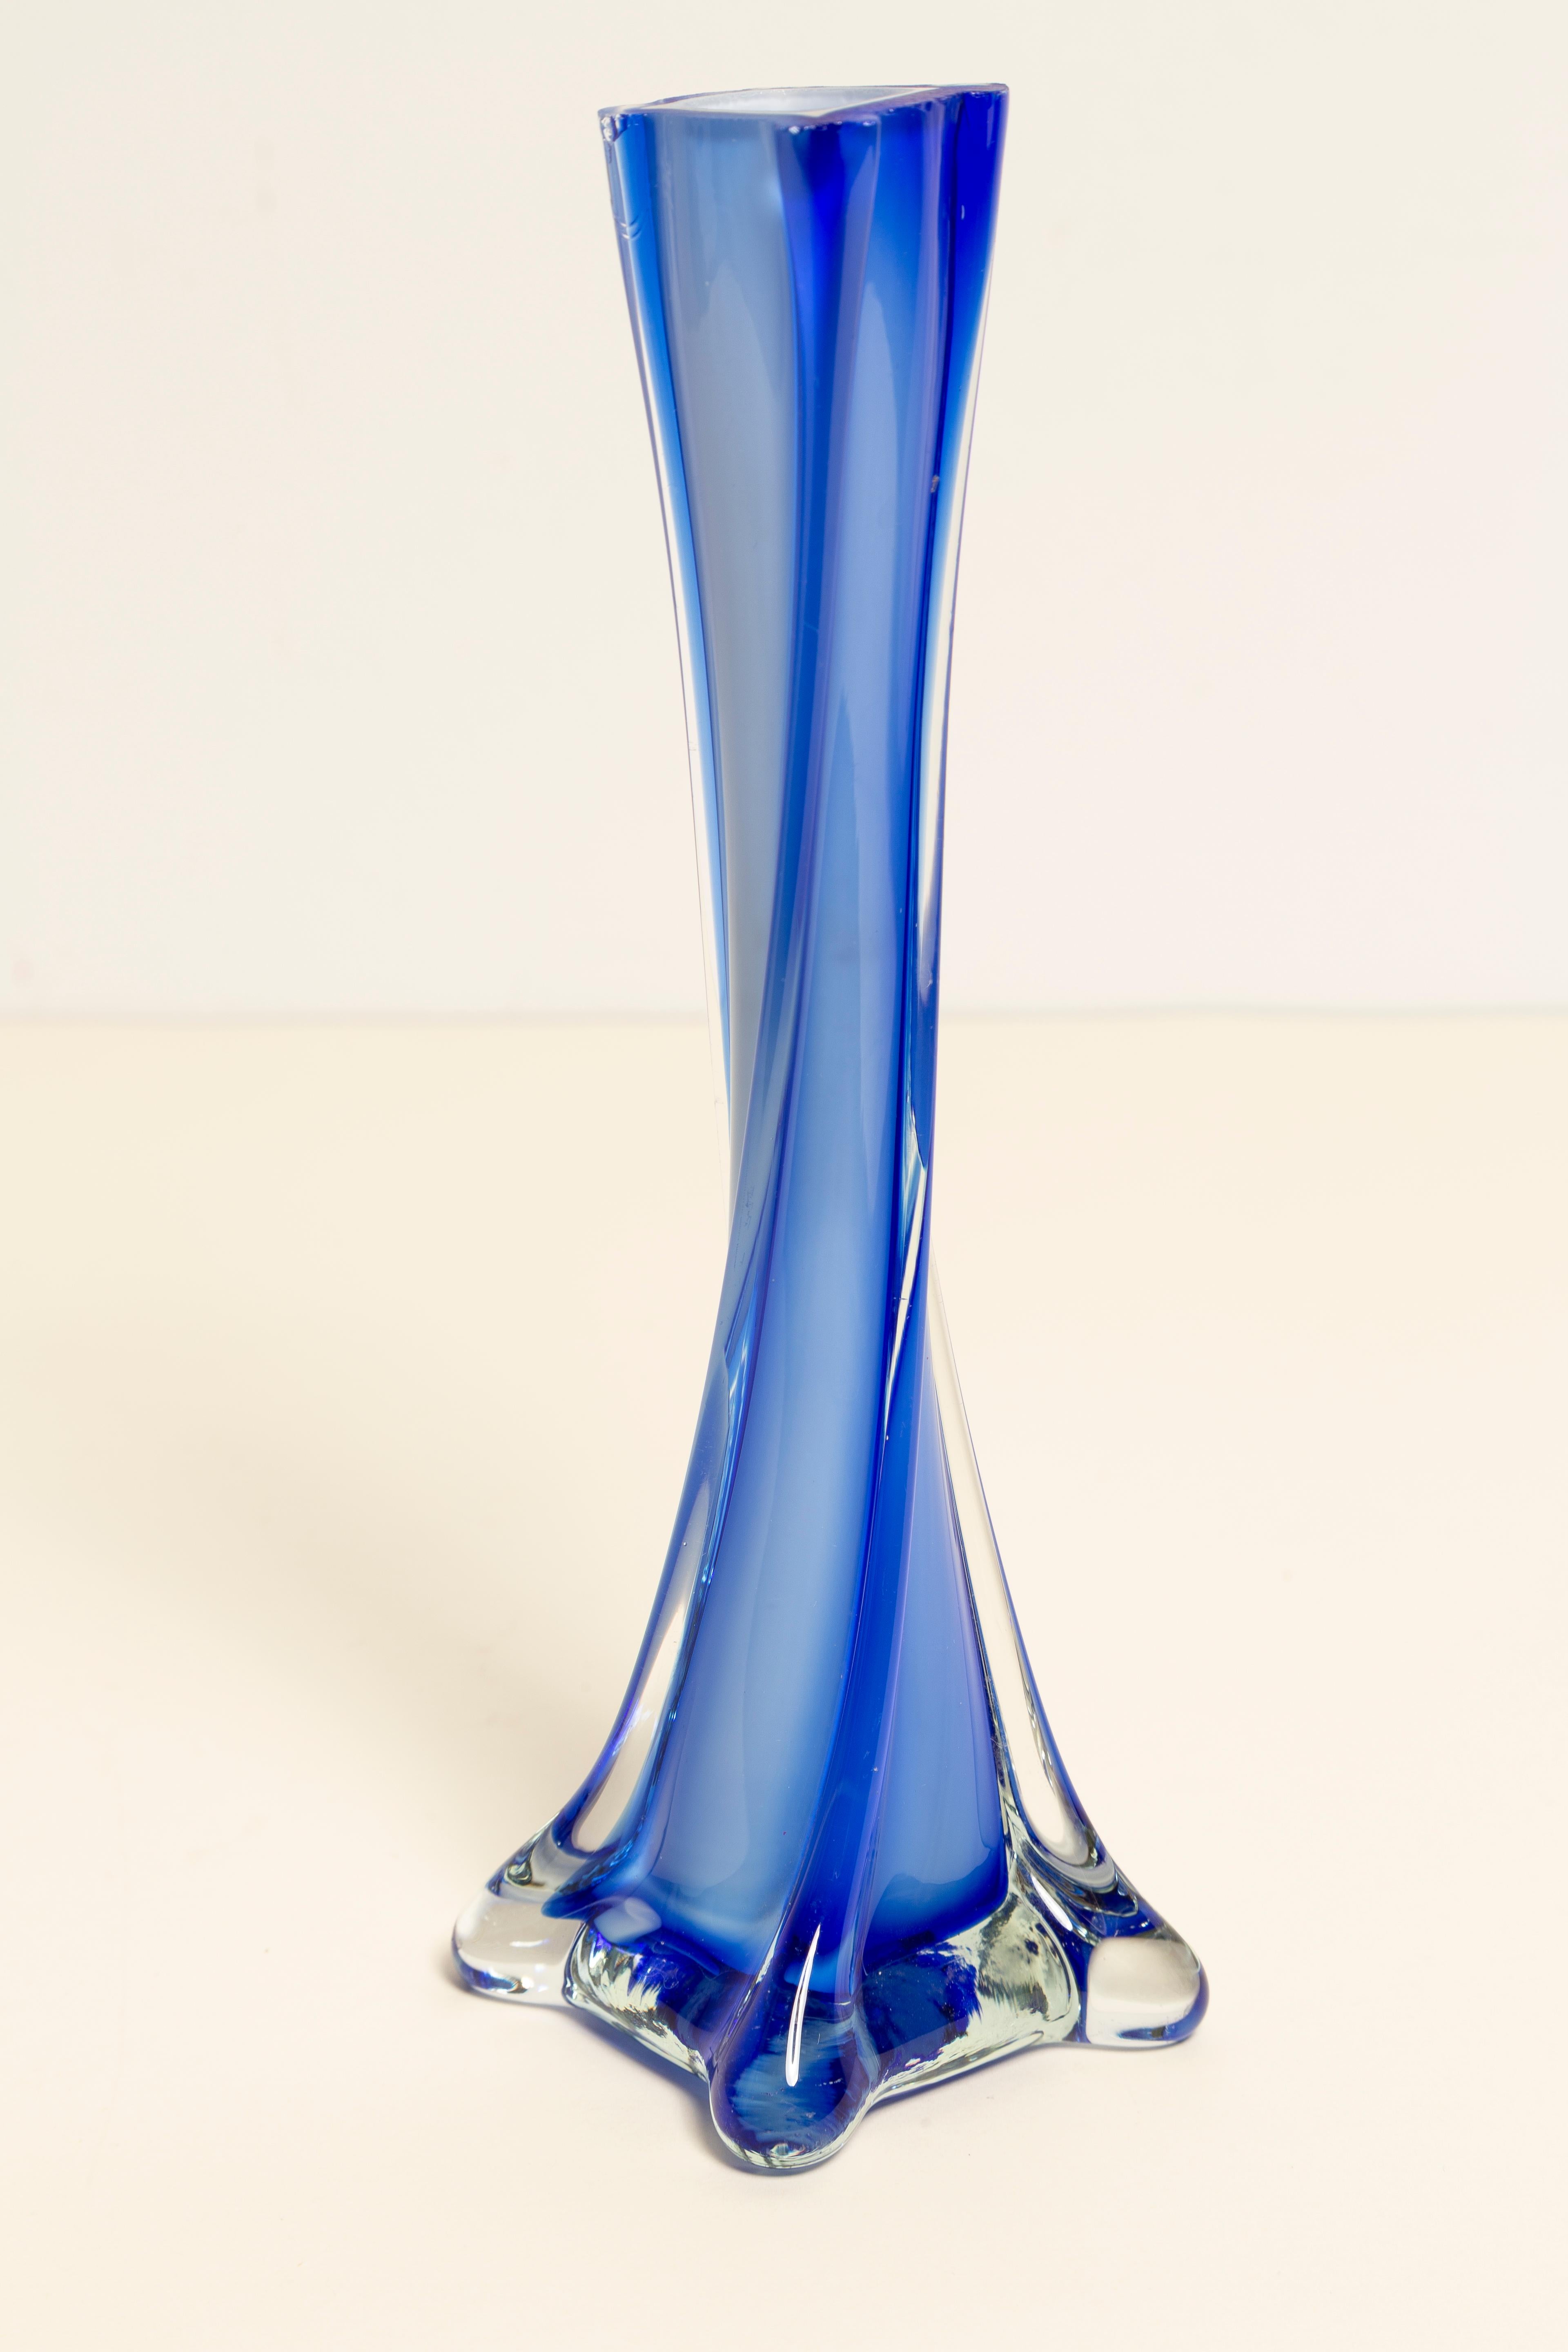 20th Century Midcentury Vintage Slim Blue Decorative Glass Vase, Europe, 1960s For Sale